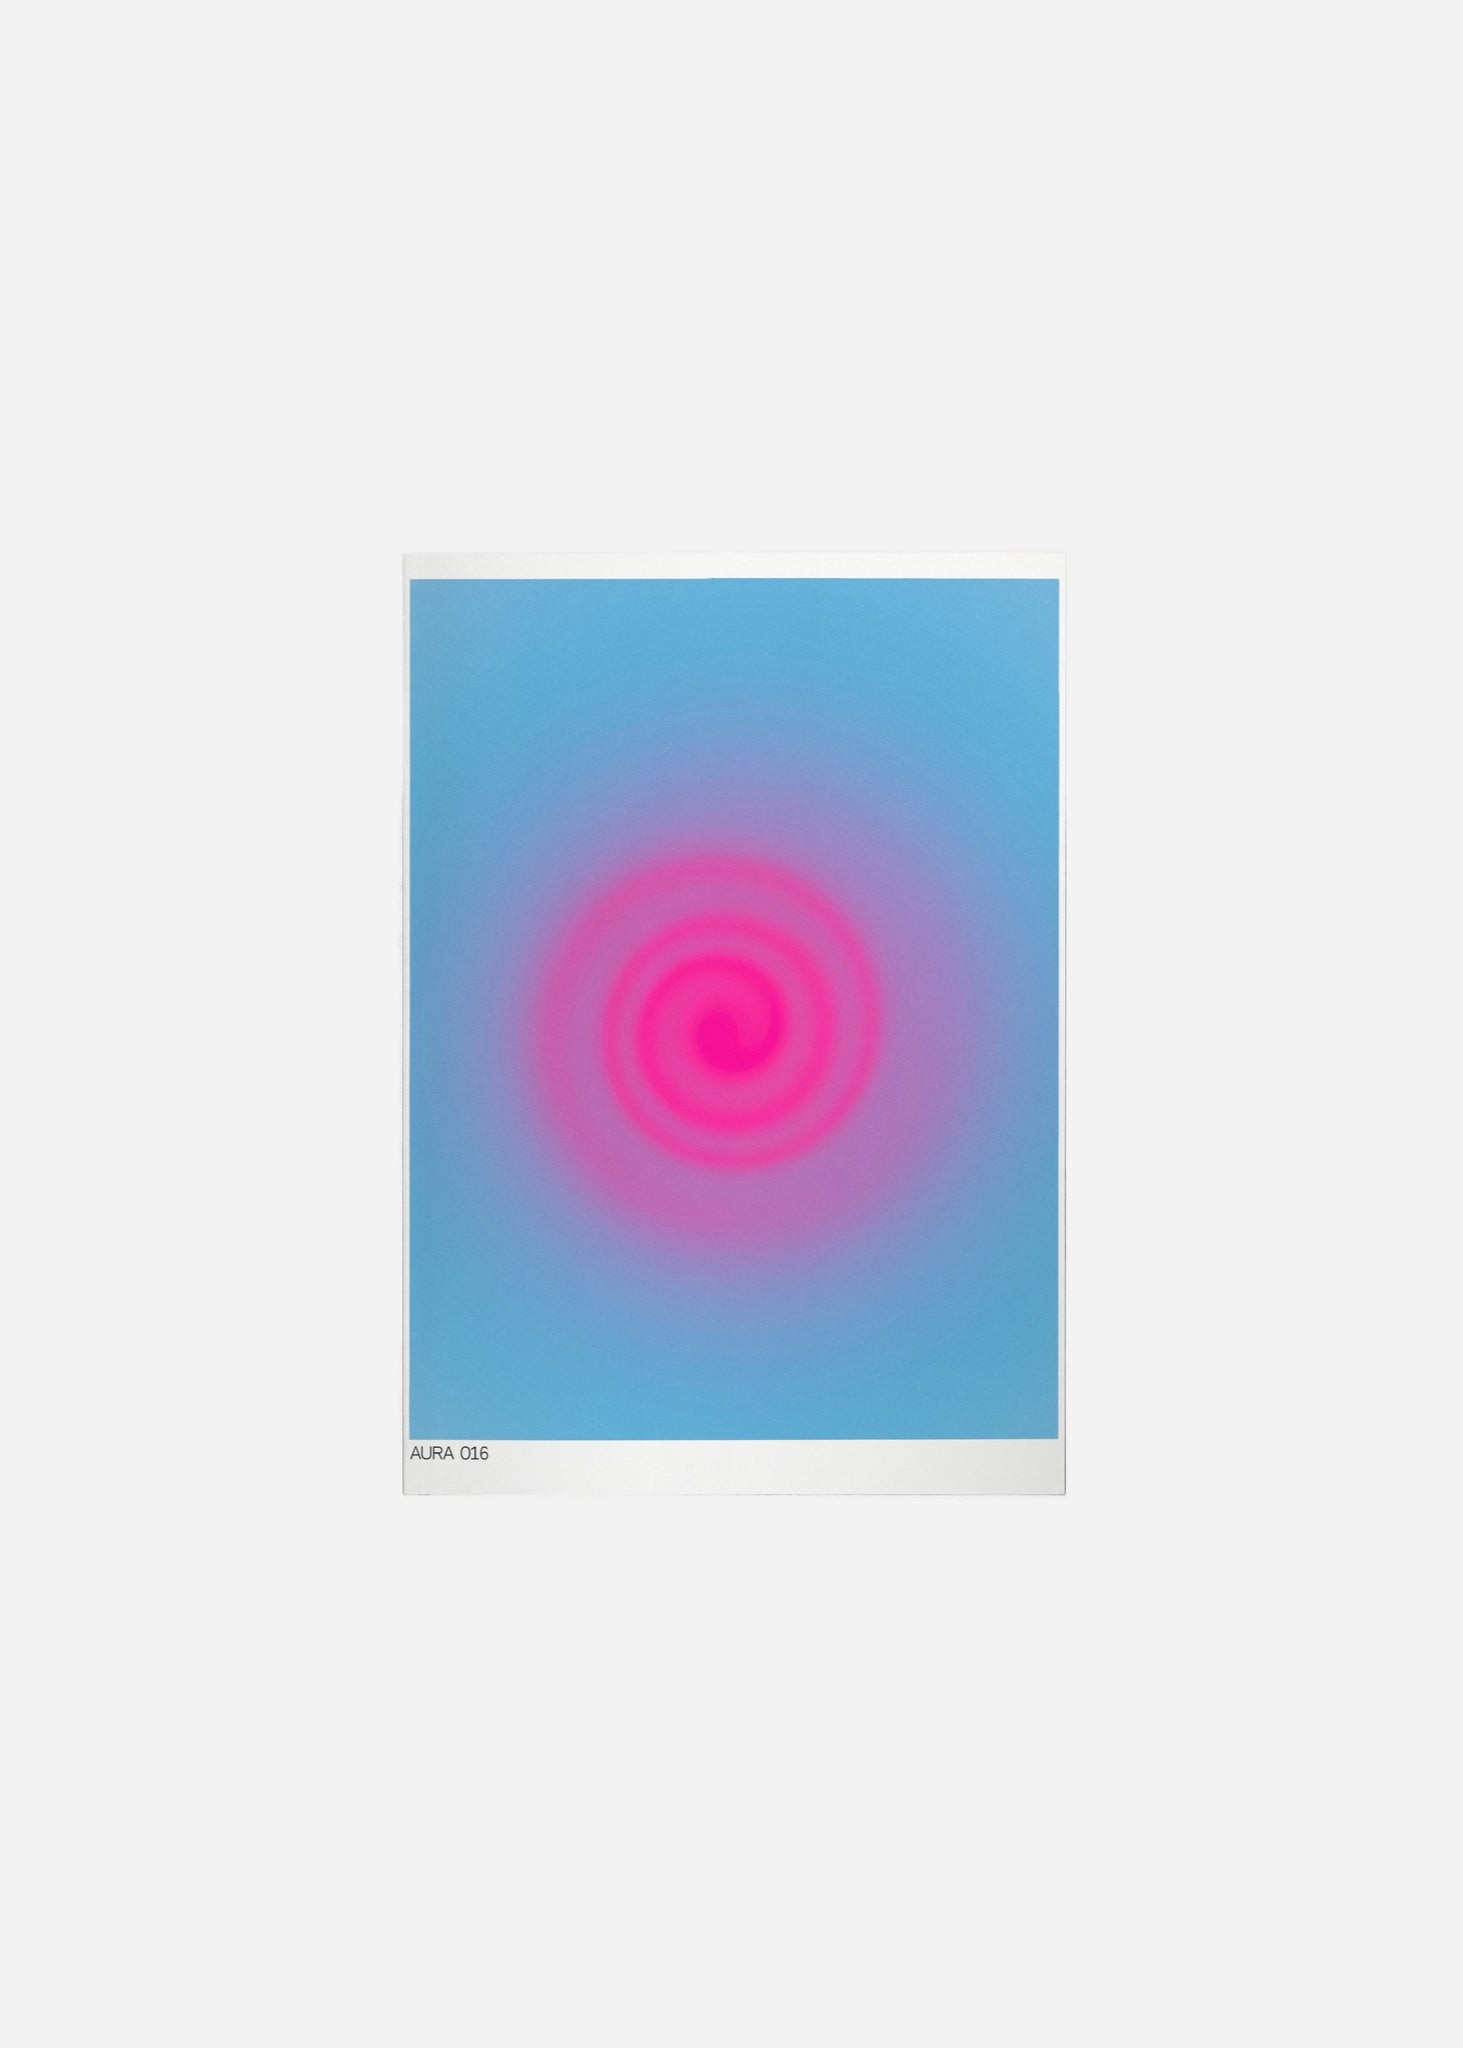 aura 016 Fine Art Print